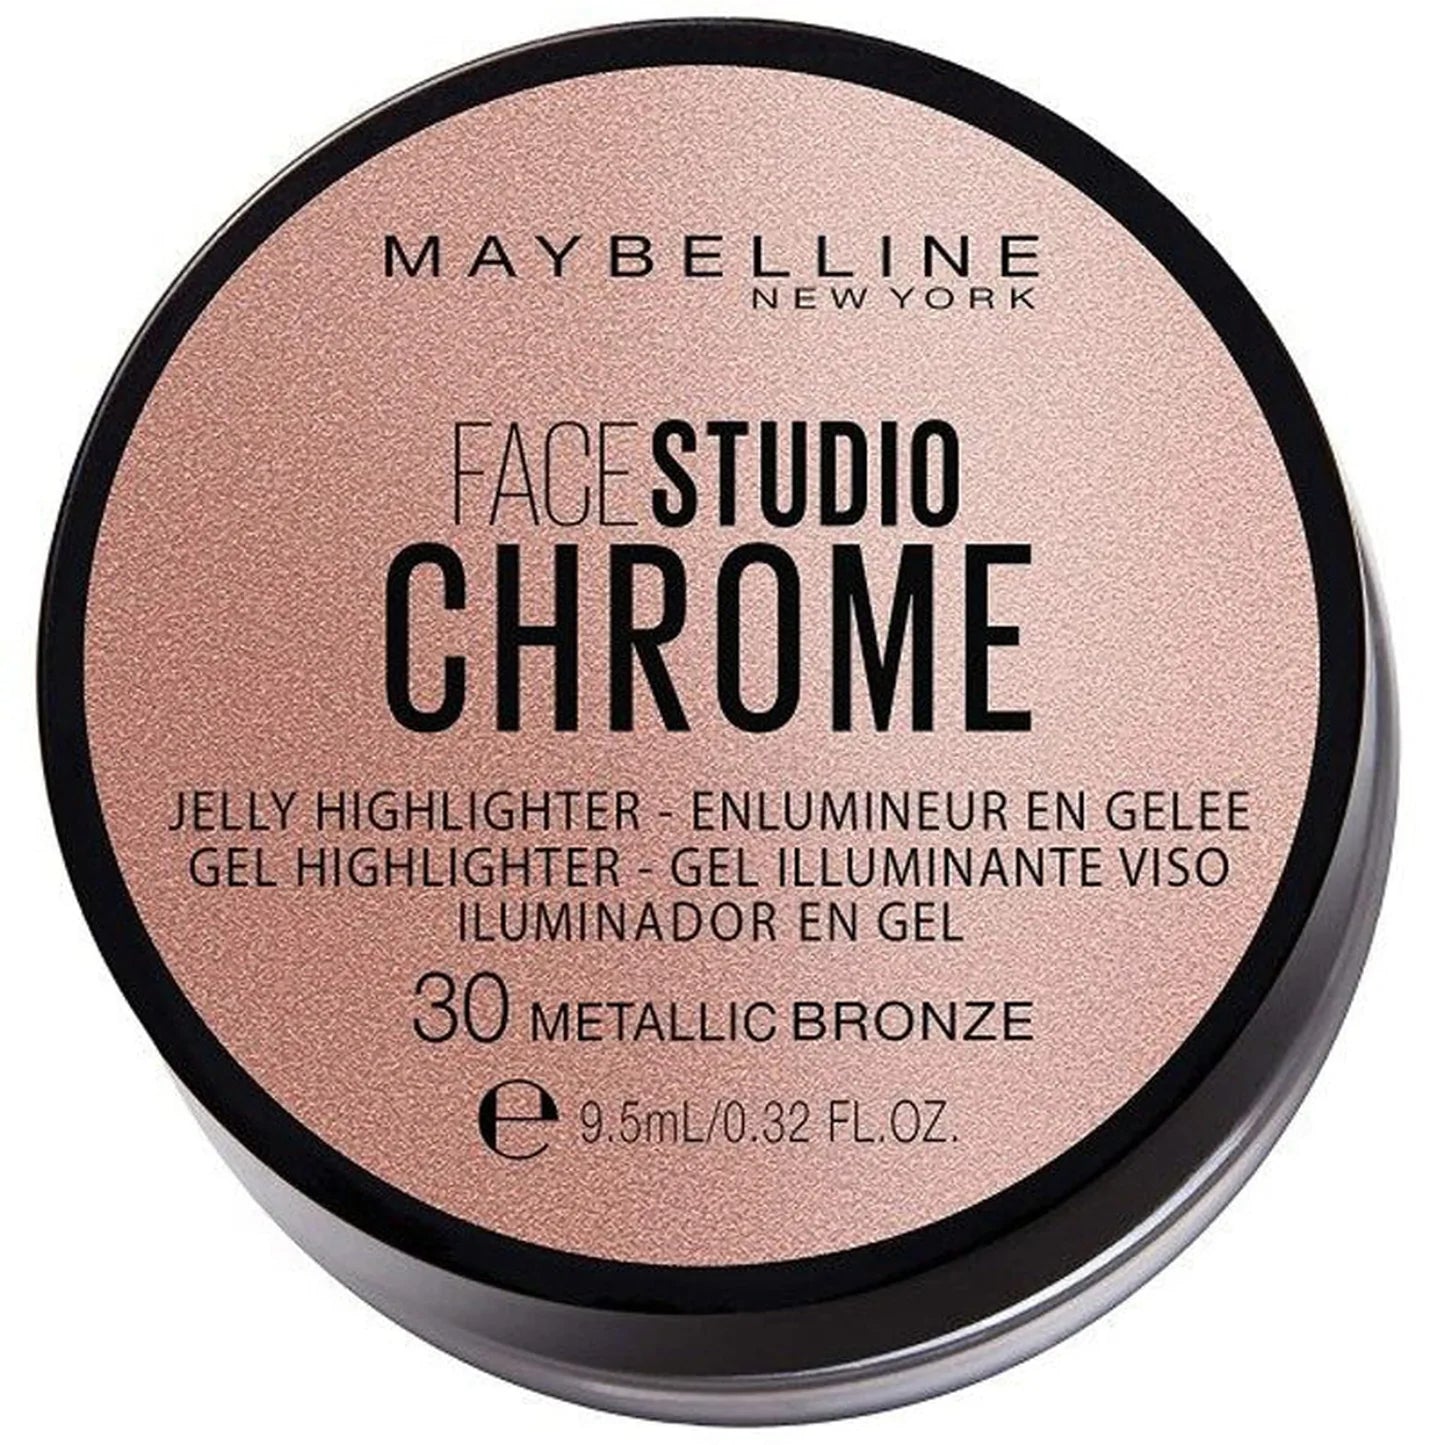 [B-GRADE] Maybelline Face Studio Chrome Jelly Highlighter - 30 Metallic Bronze